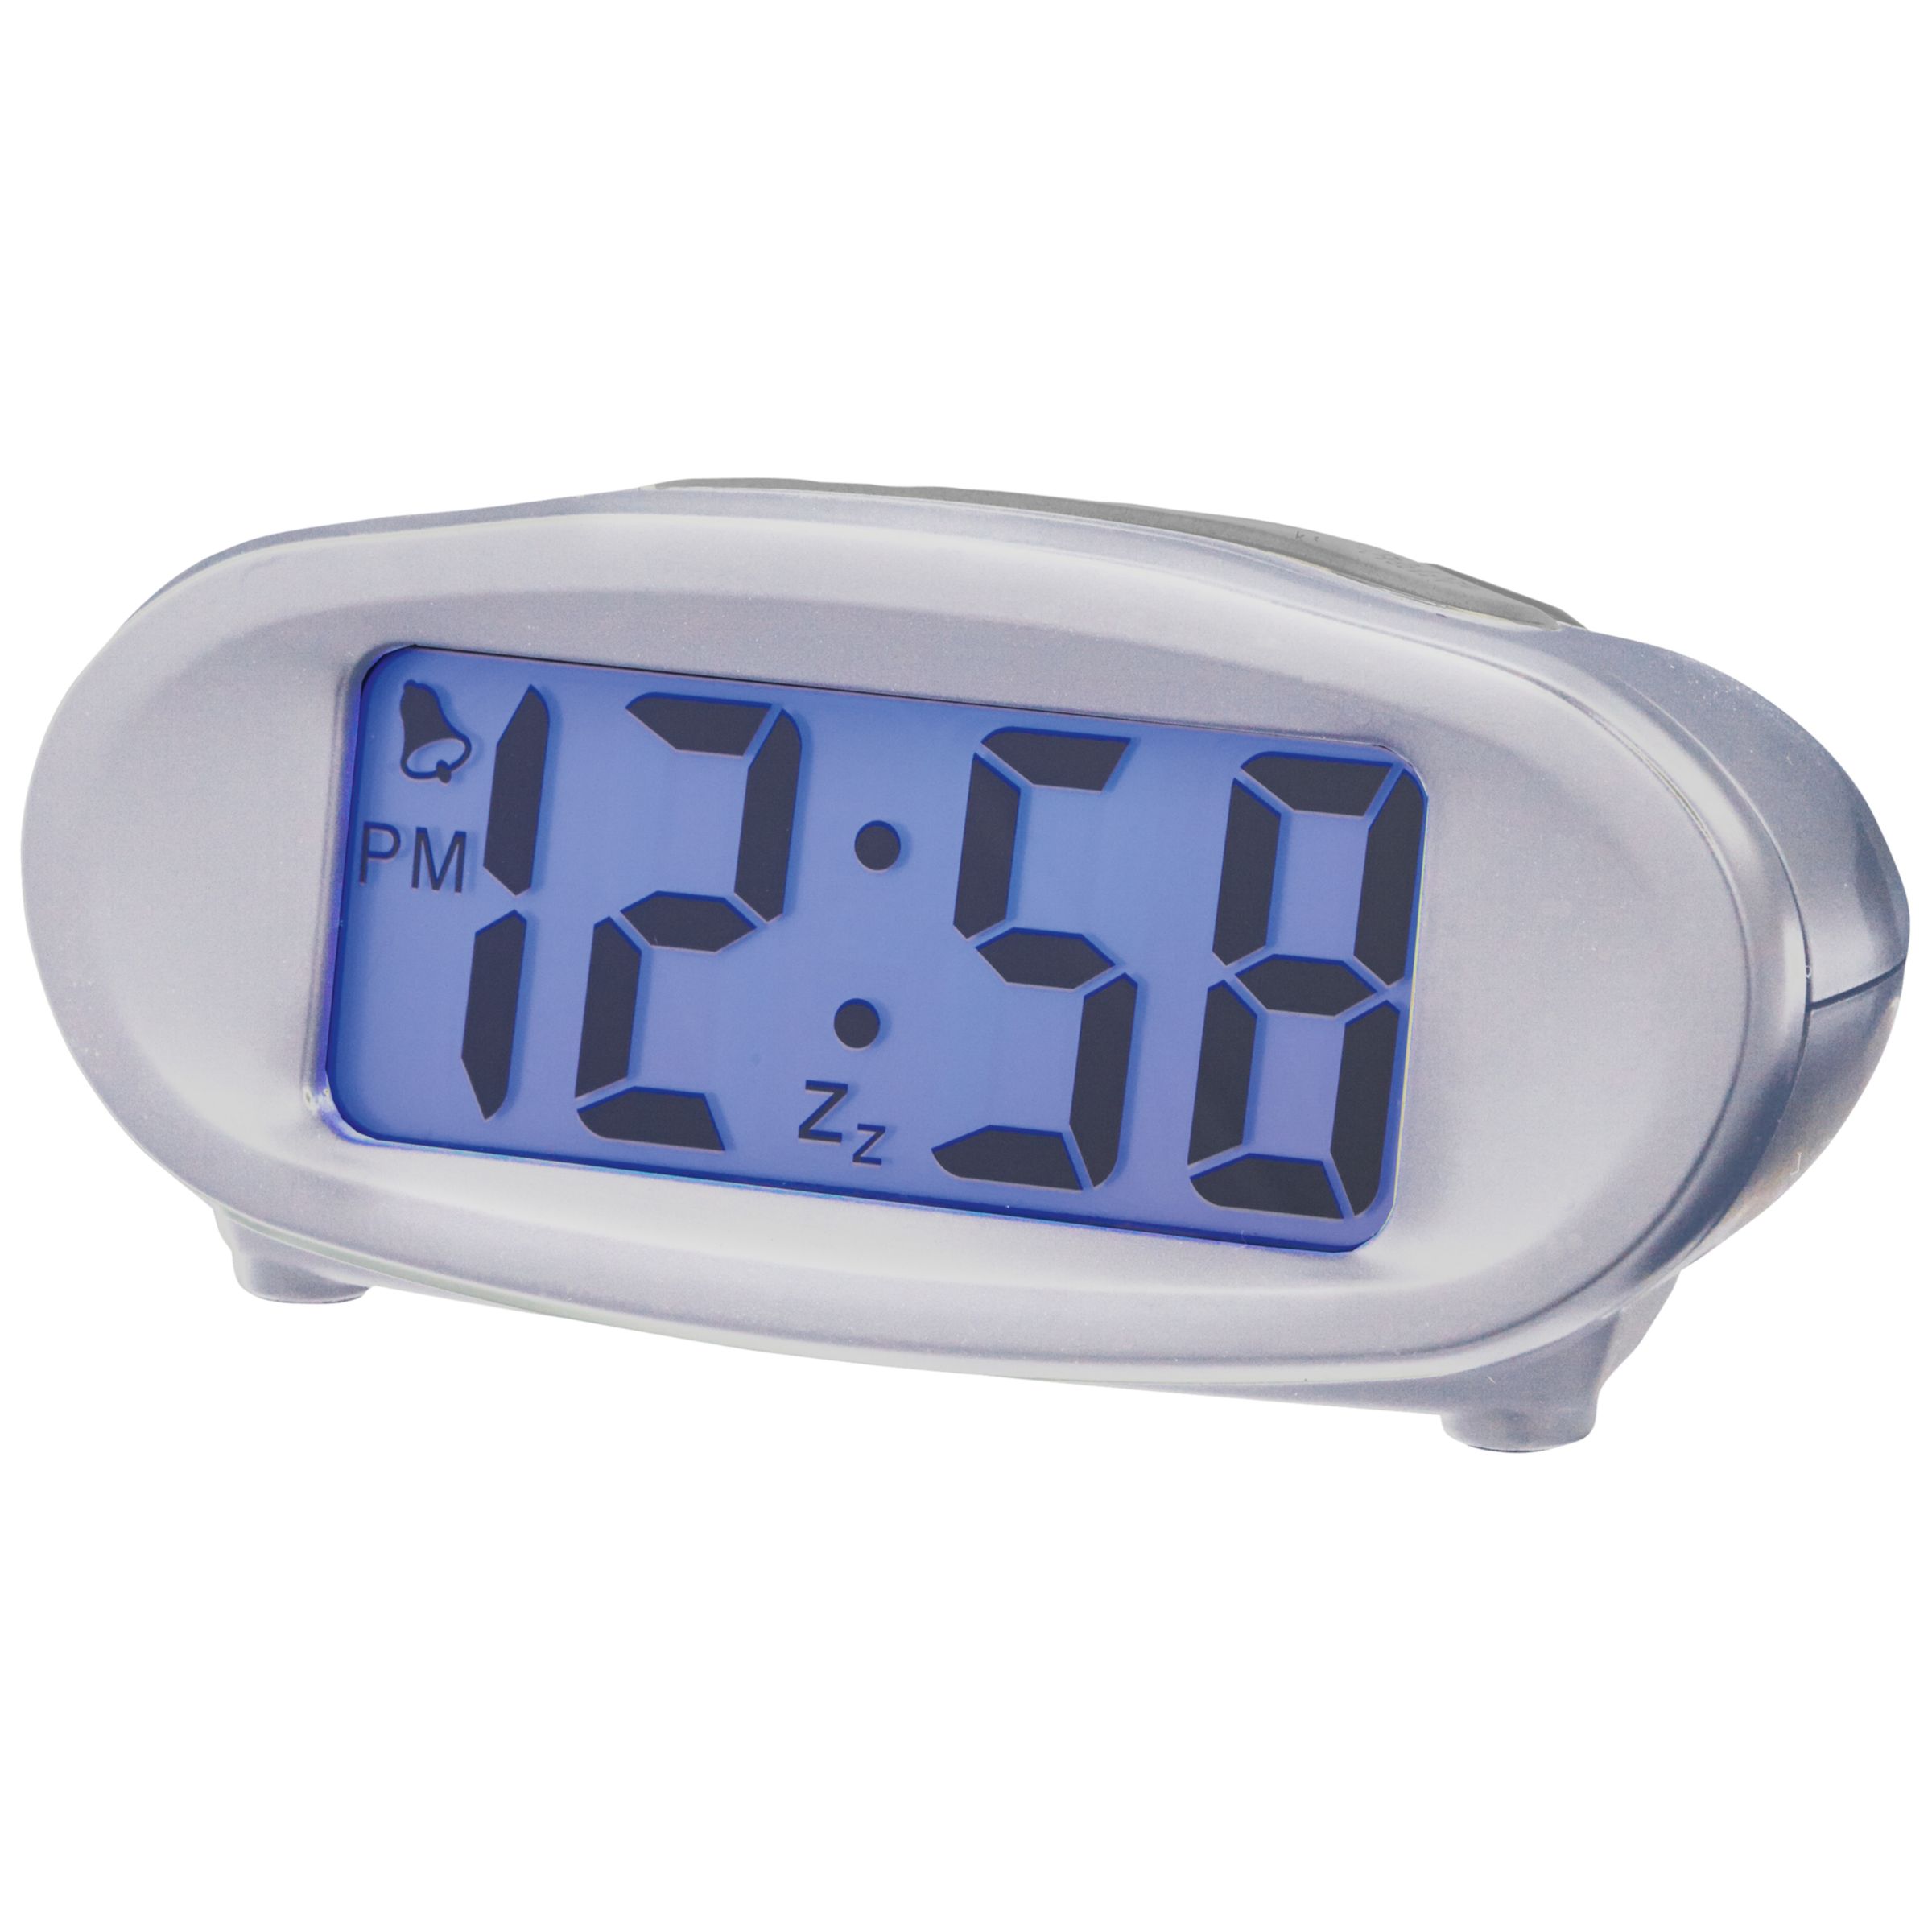  LecWec Alarm Clock, Silver, Small/Normall : Home & Kitchen